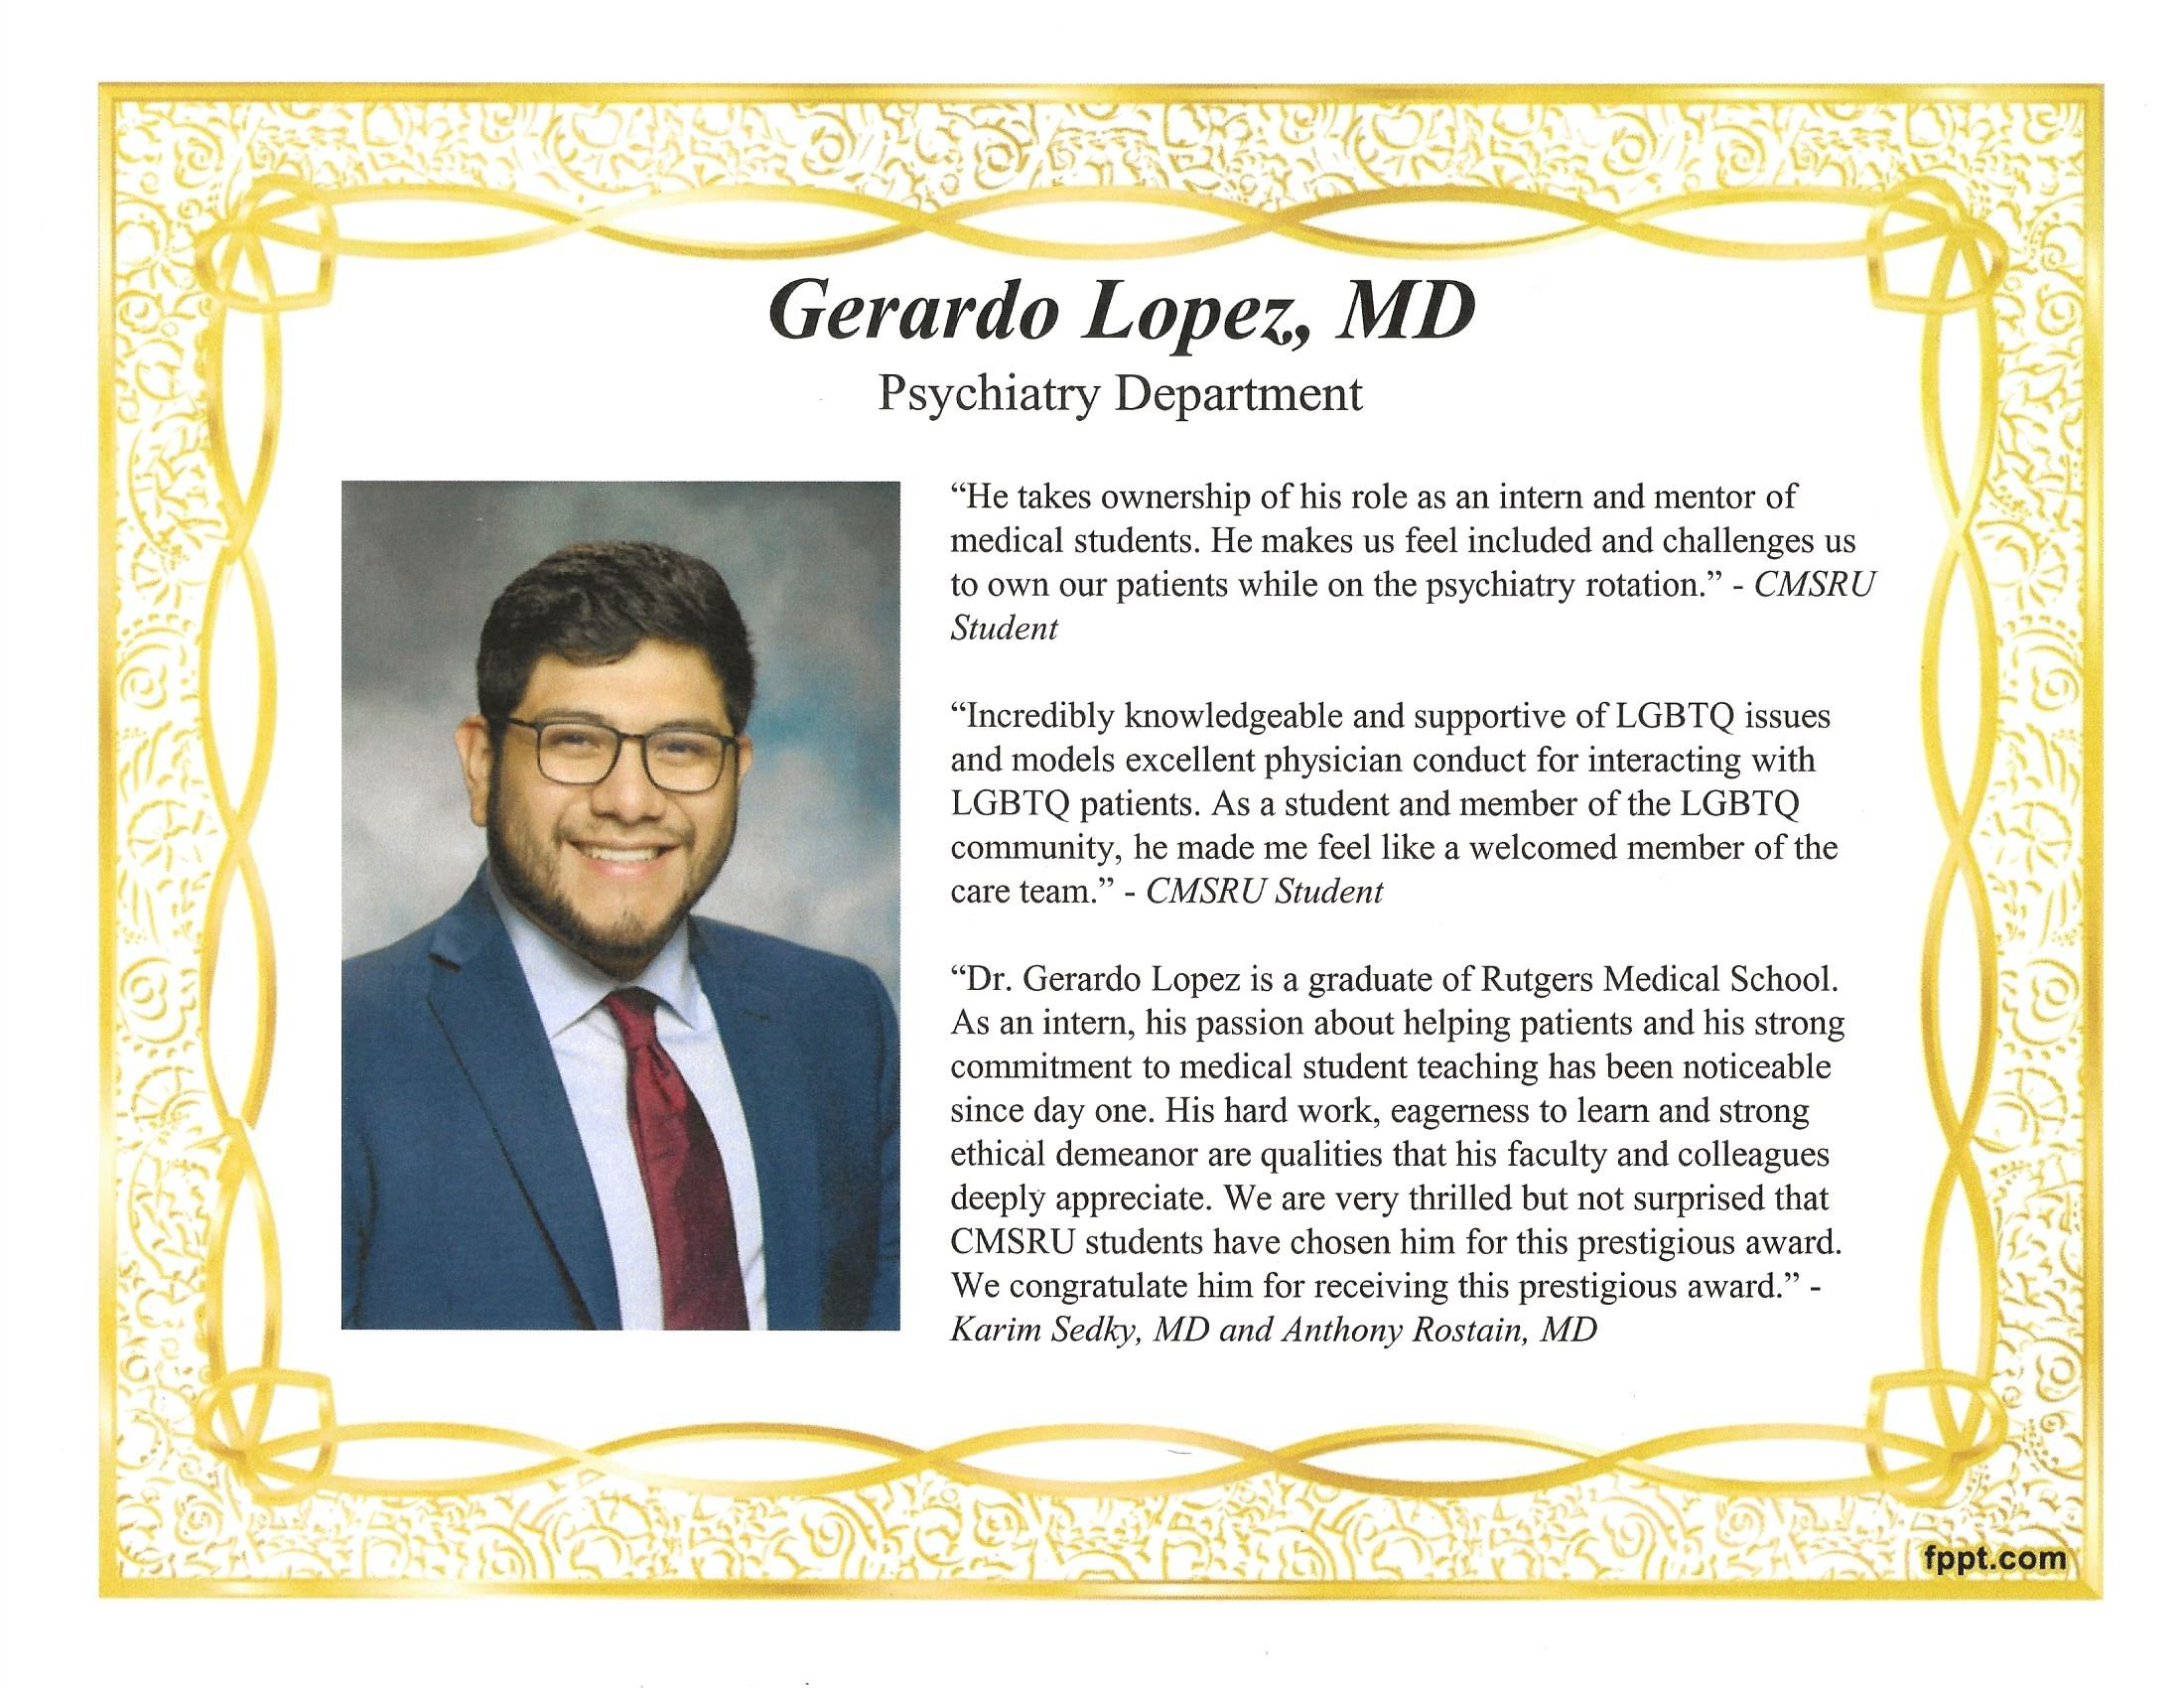 Gold Humanism Award to Gerardo Lopez, MD